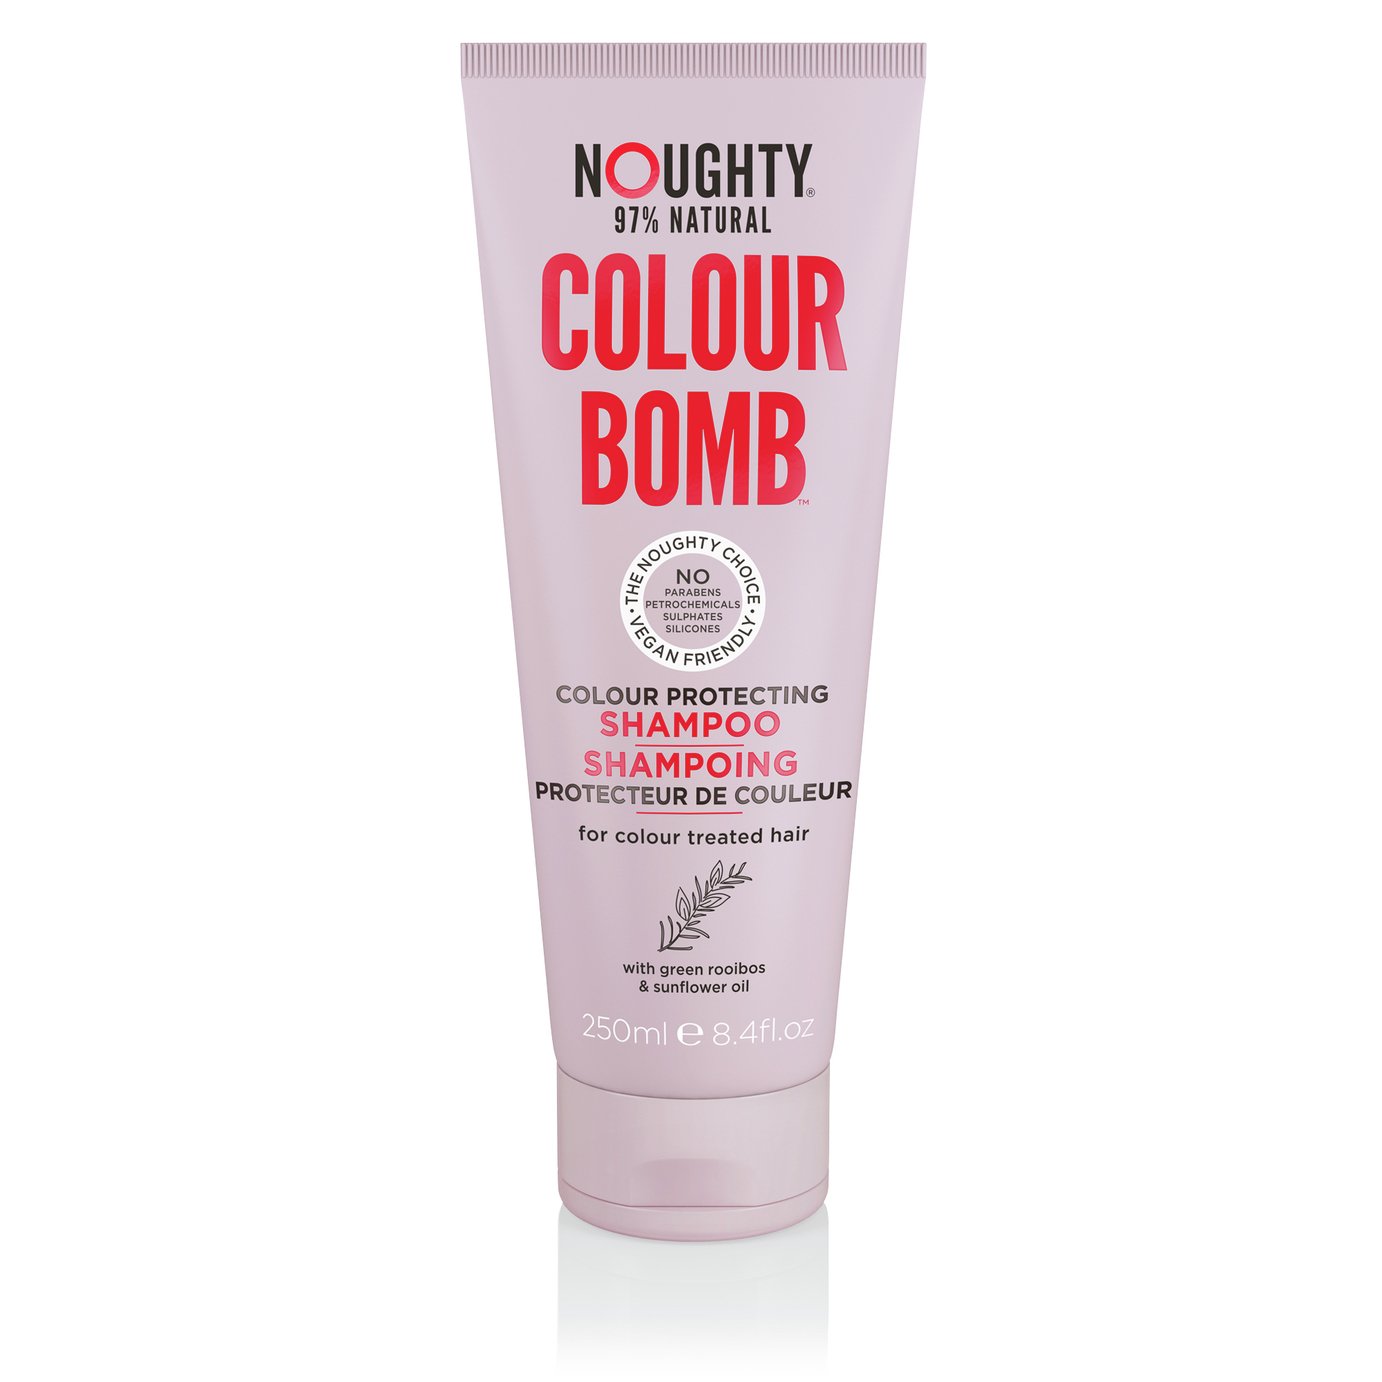 Noughty Colour Bomb Shampoo - 250ml